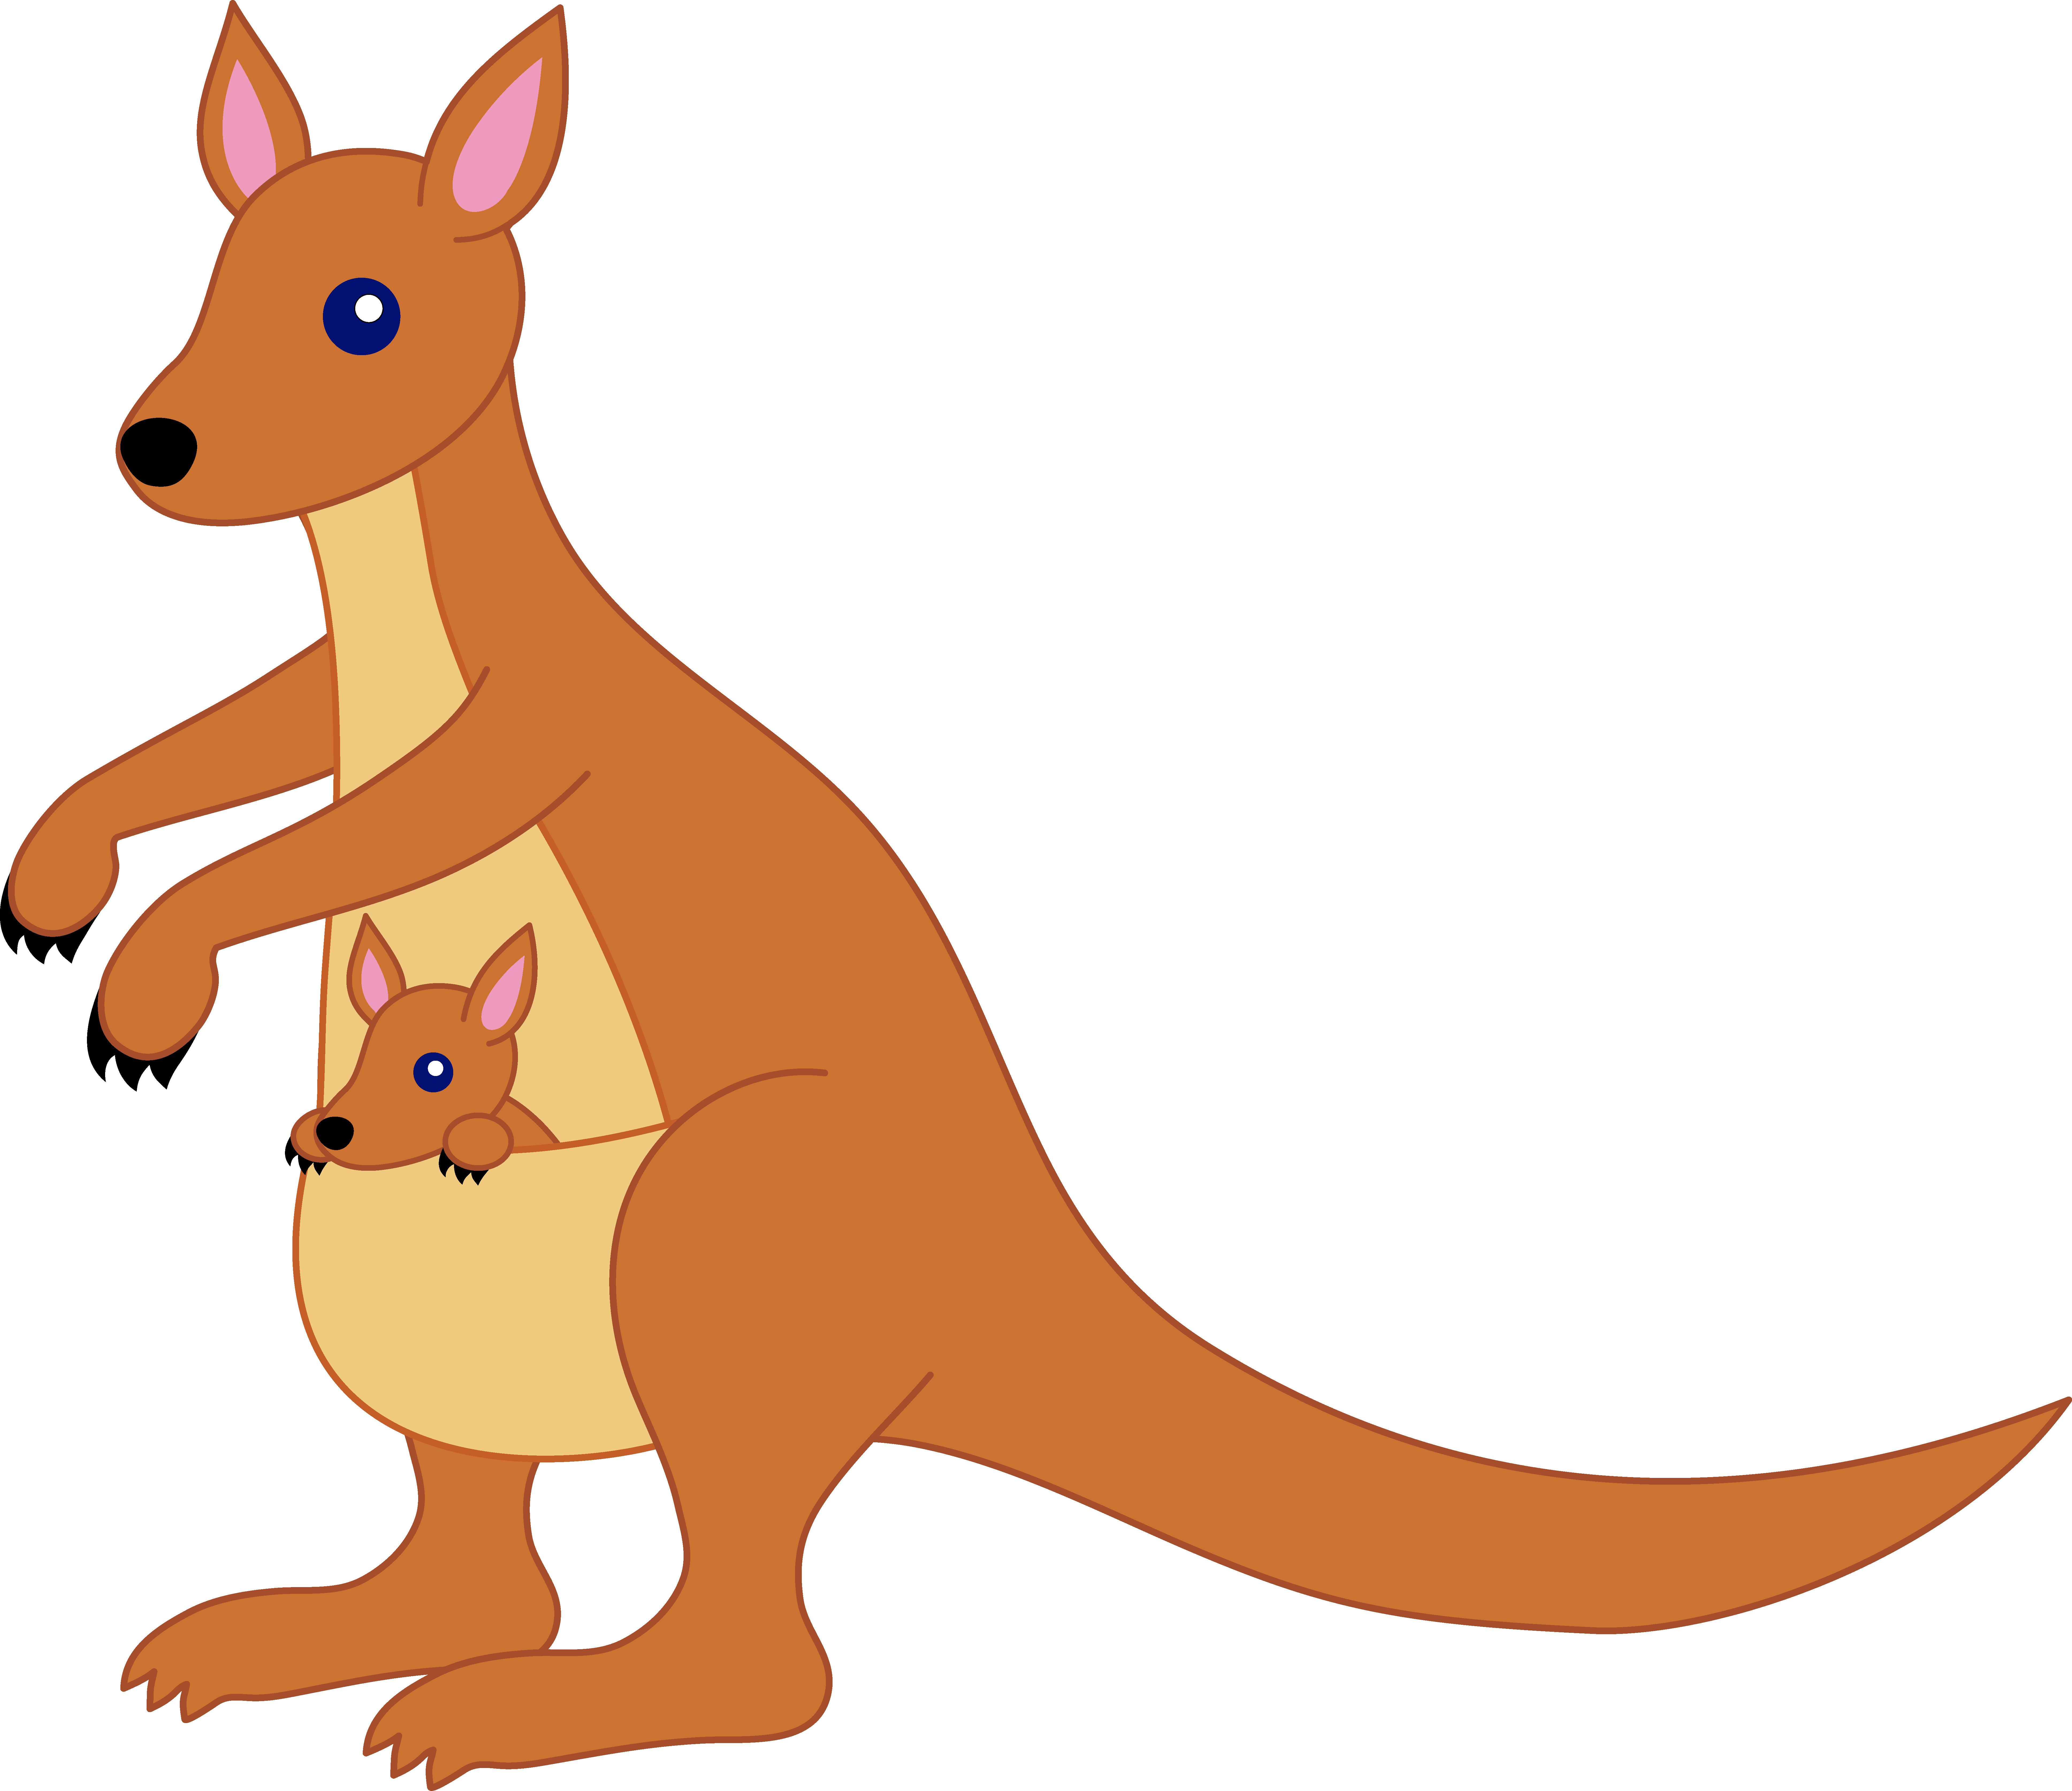 Kangaroo cartoon with baby